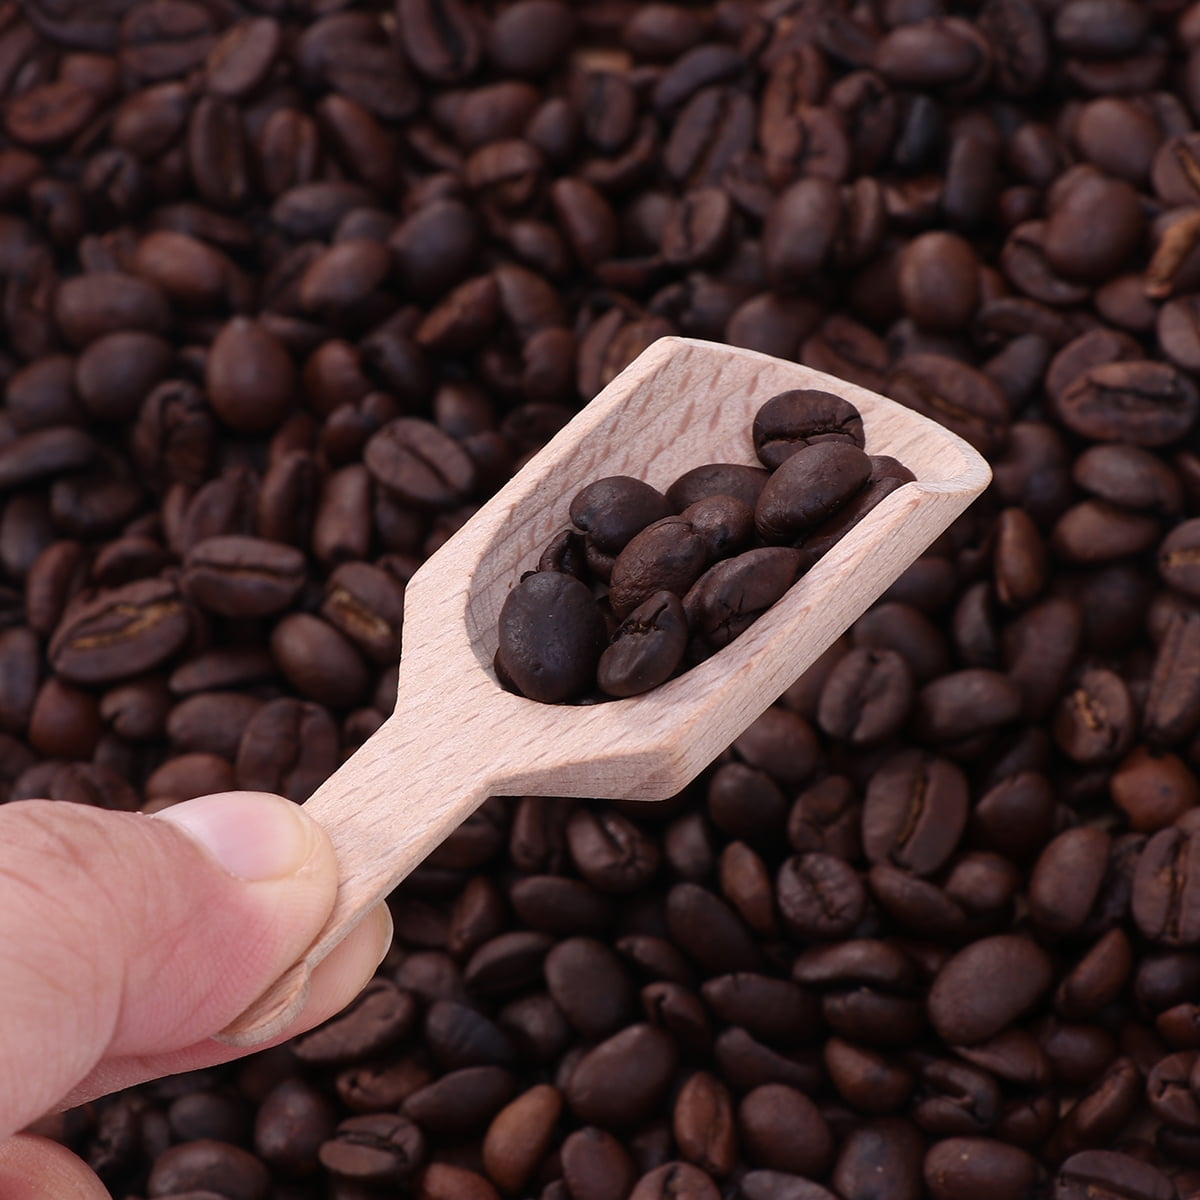 Details about   4pcs Wooden Coffee Tea Scoops Mini Candy Bath Salt Spices Flavors Spoons